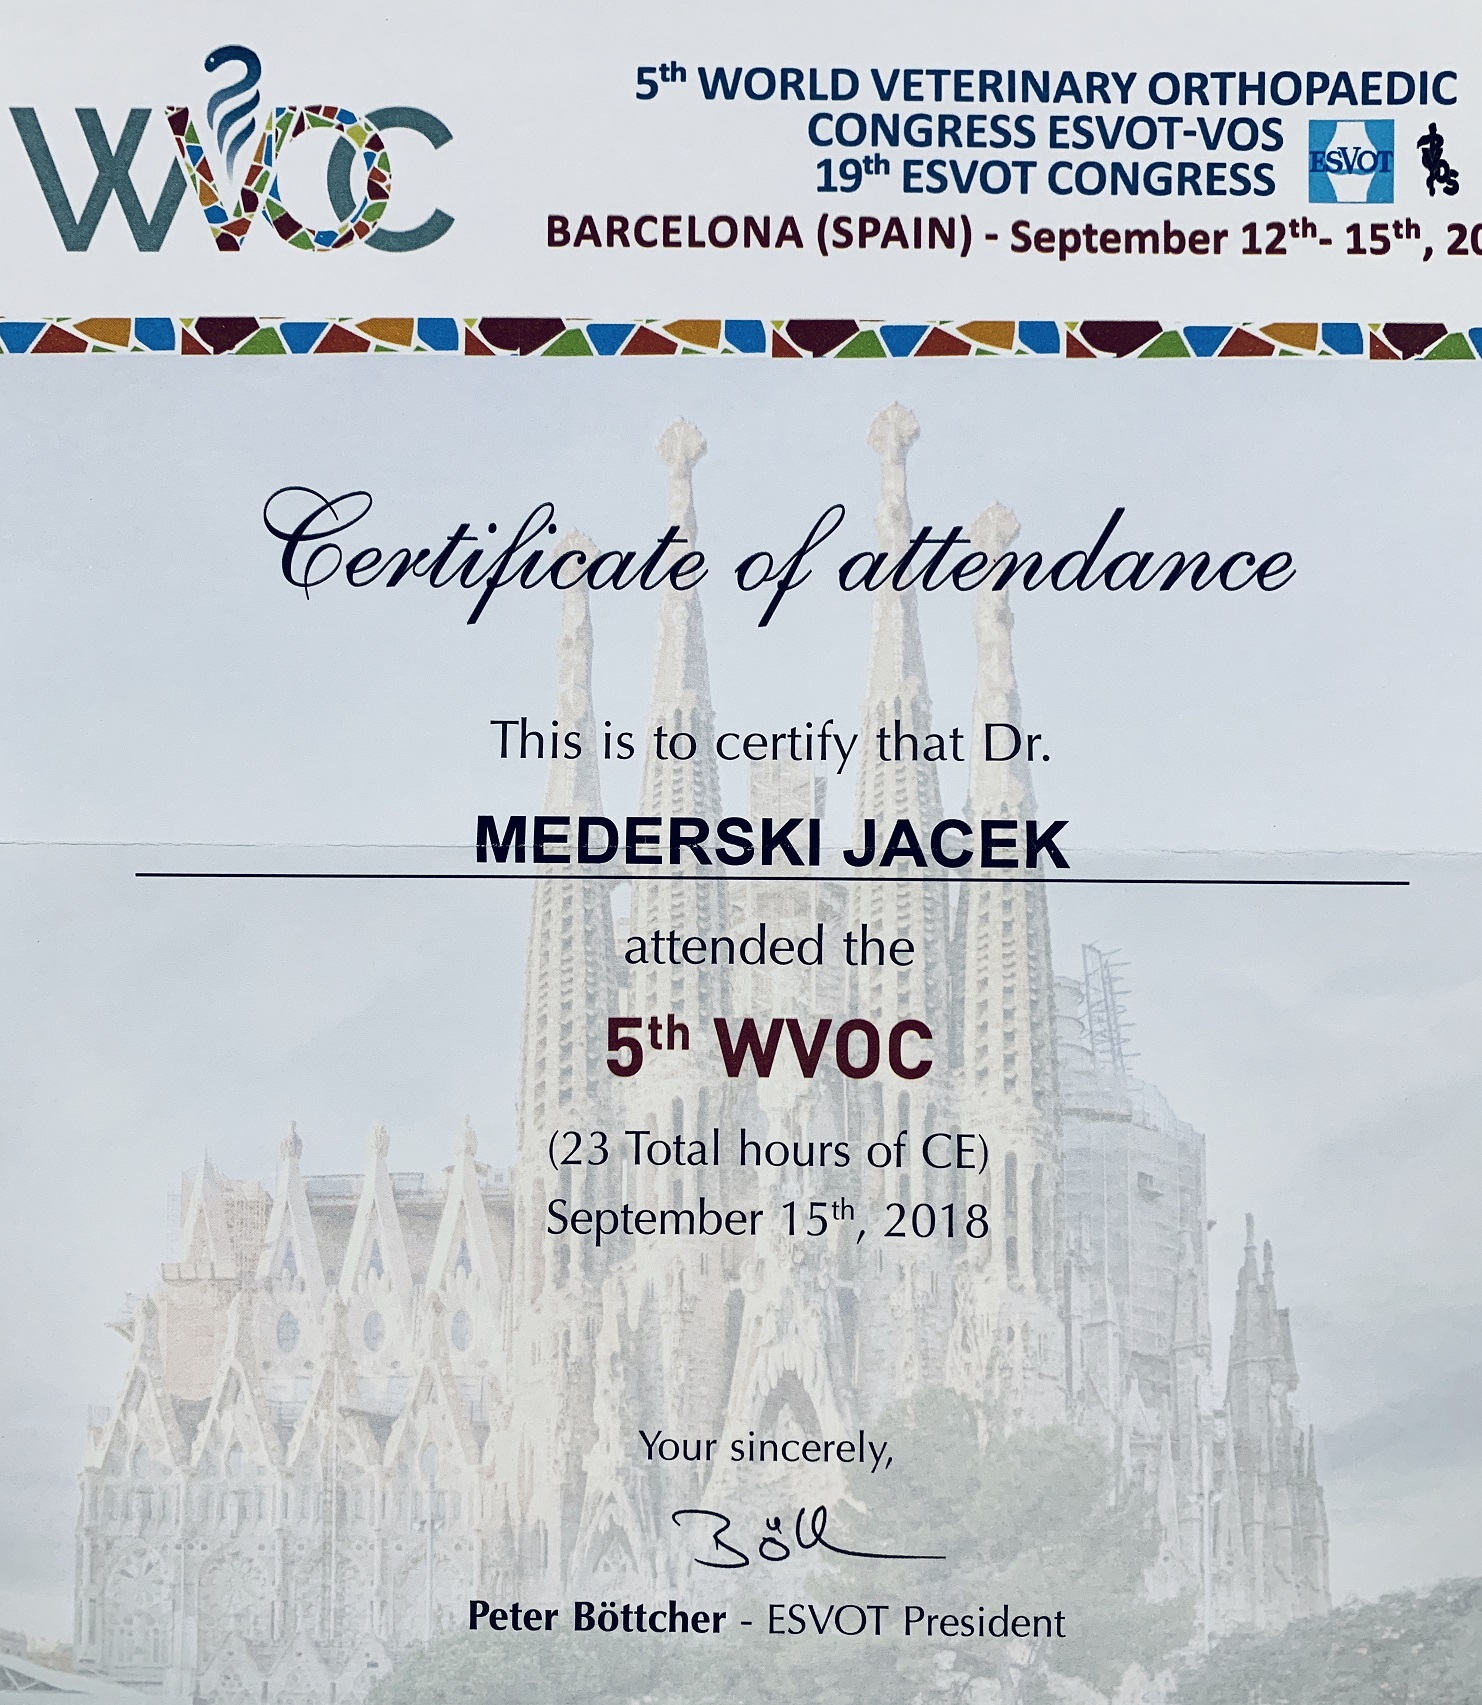 5th World Veterinary Ortopaedic Congress ESVOT-VOS-Barcelon